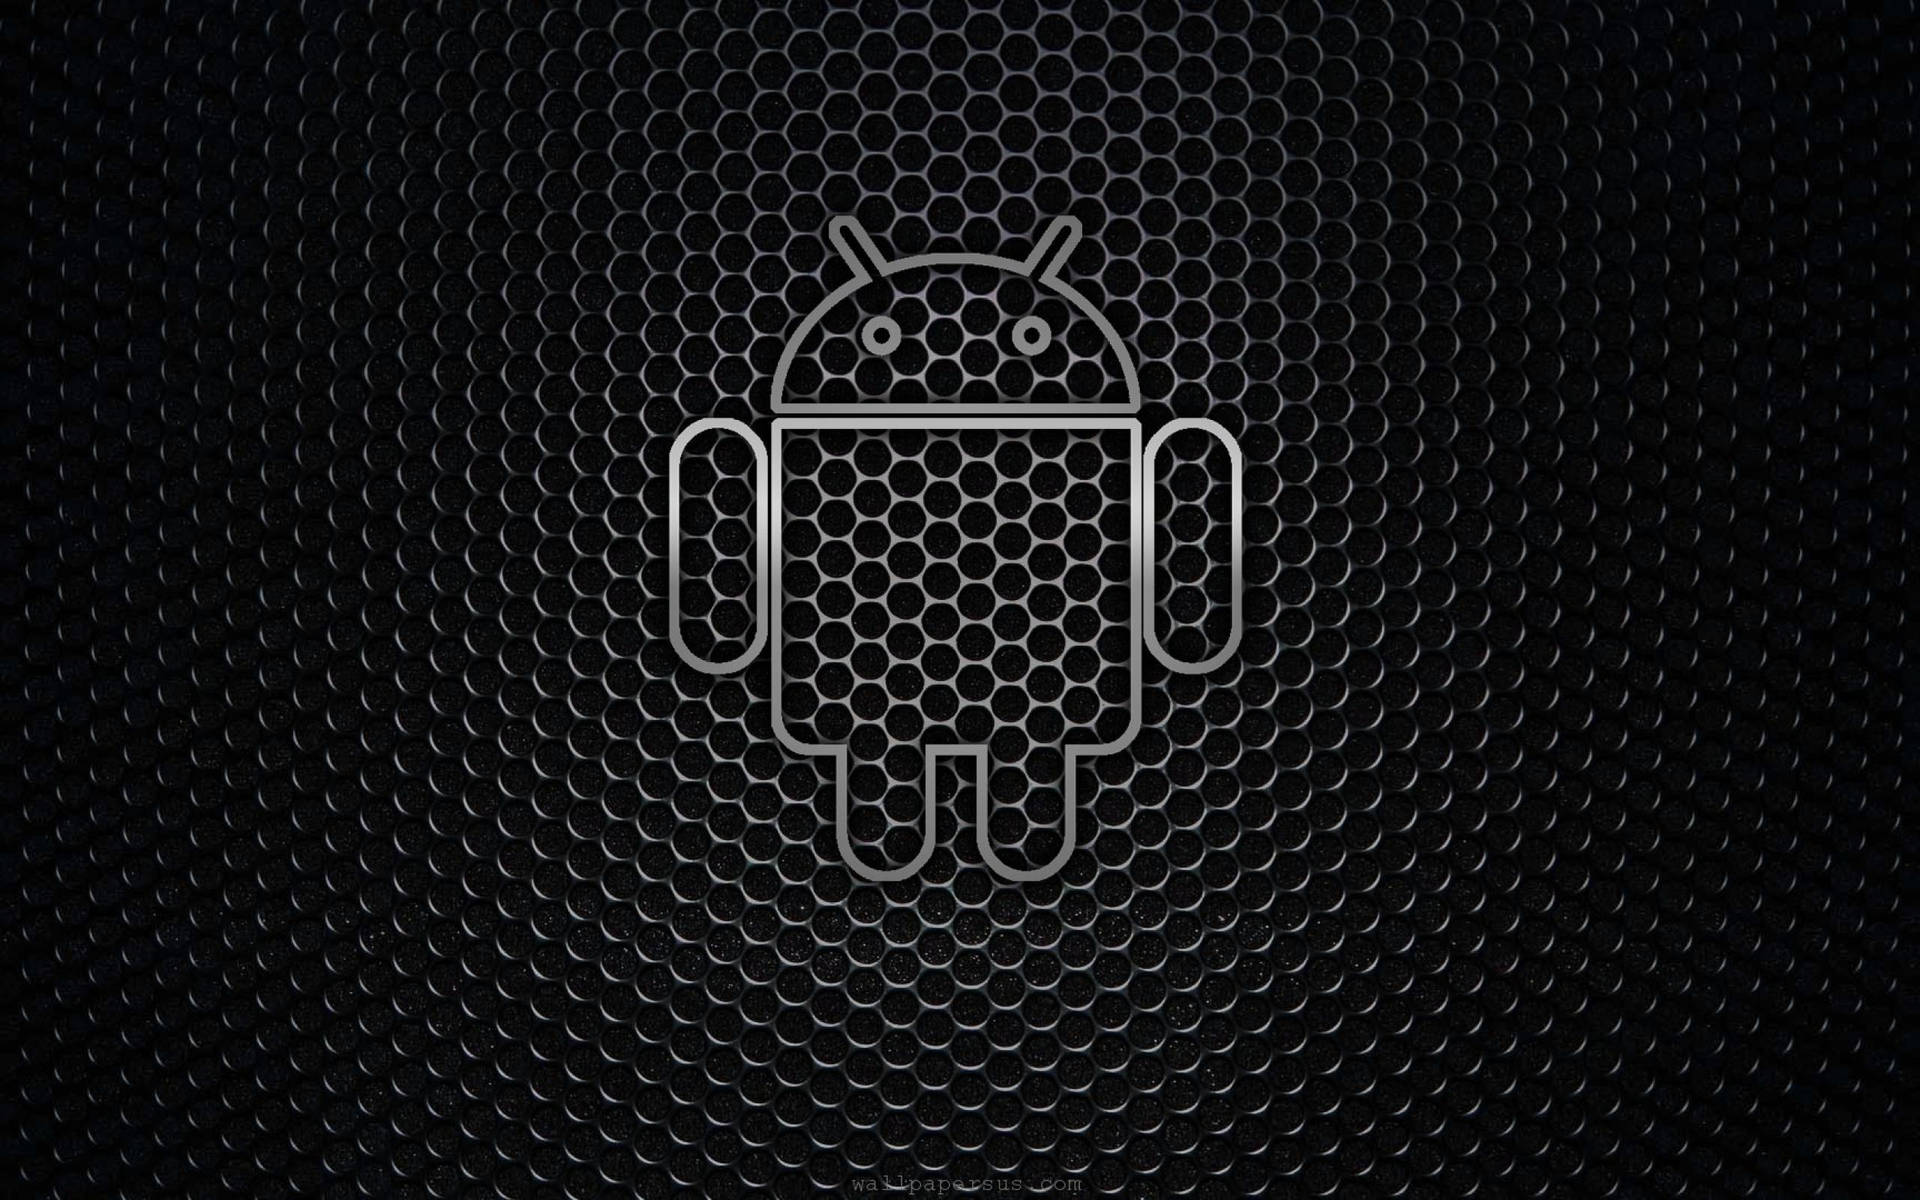 Hexagonal Mesh Android Robot Wallpaper